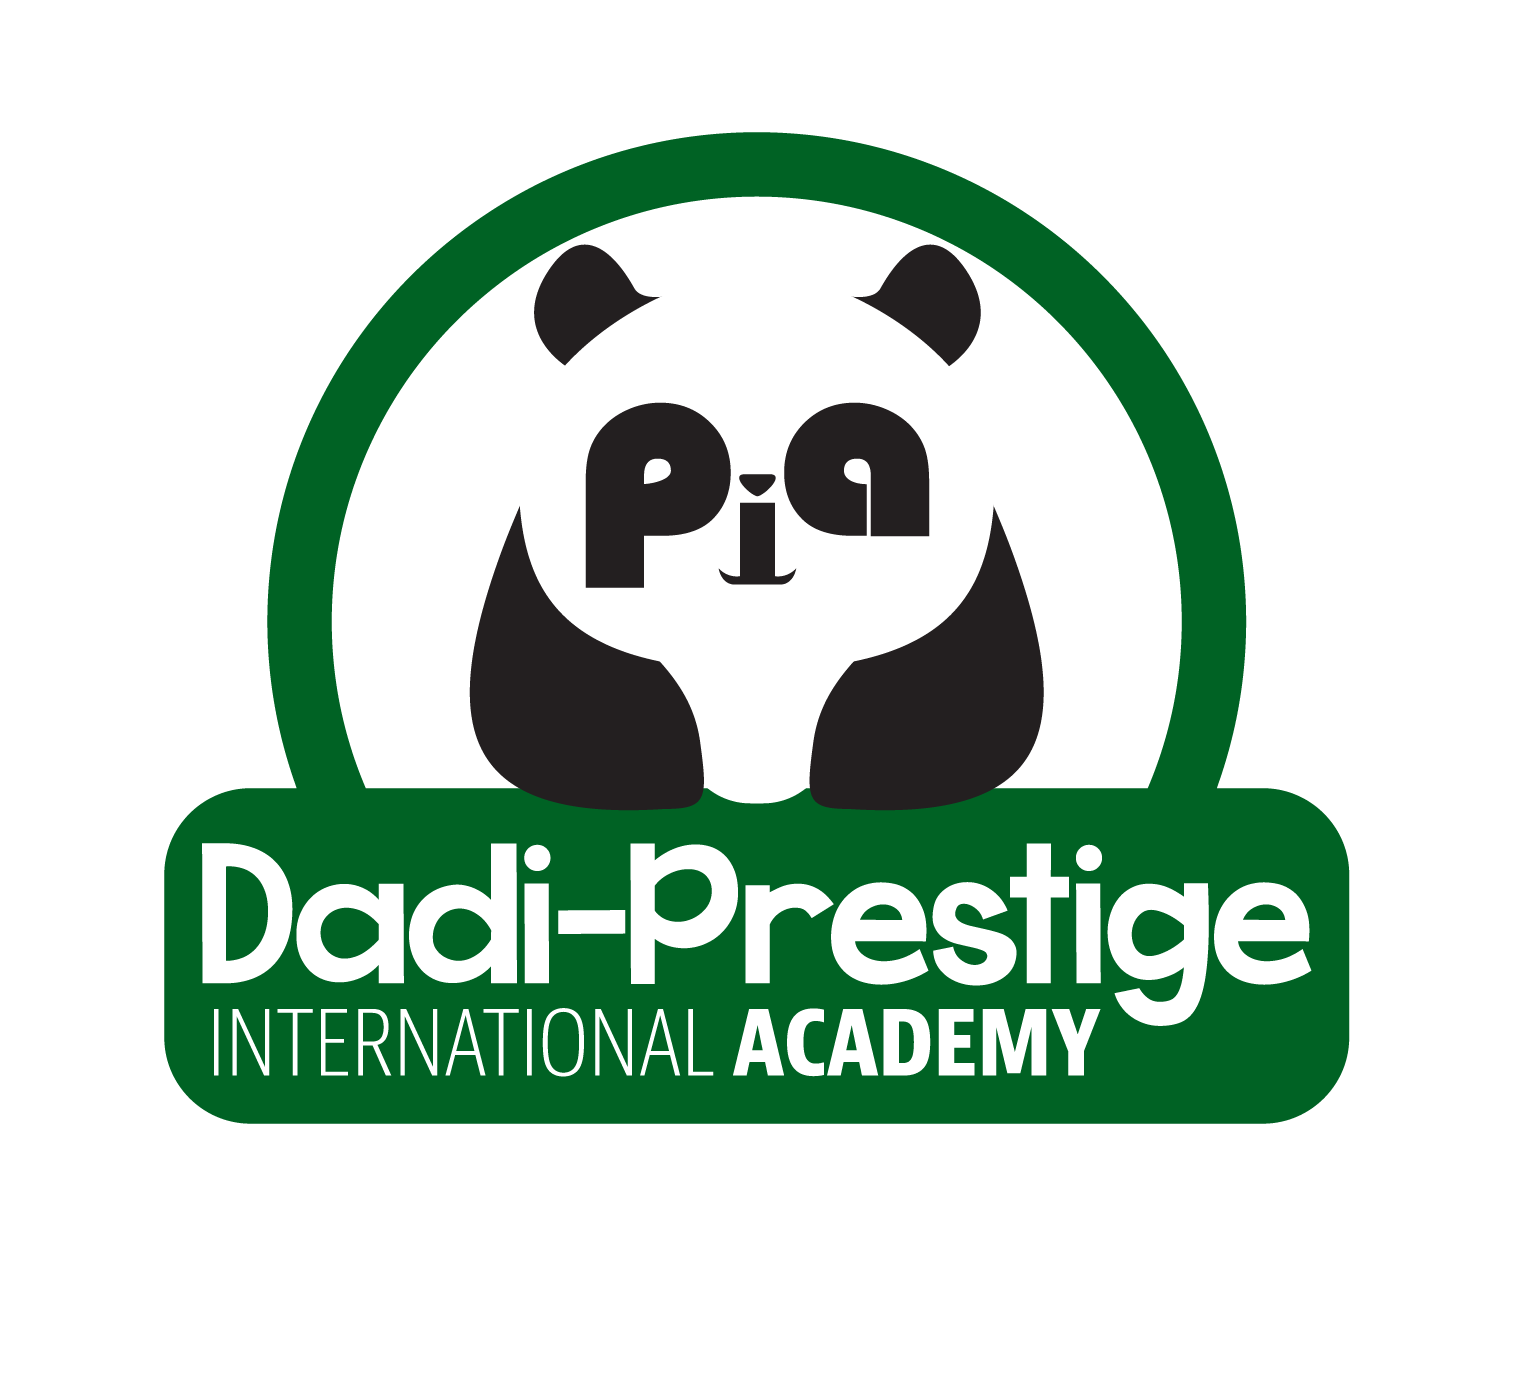 Dadi-Prestige International Academy